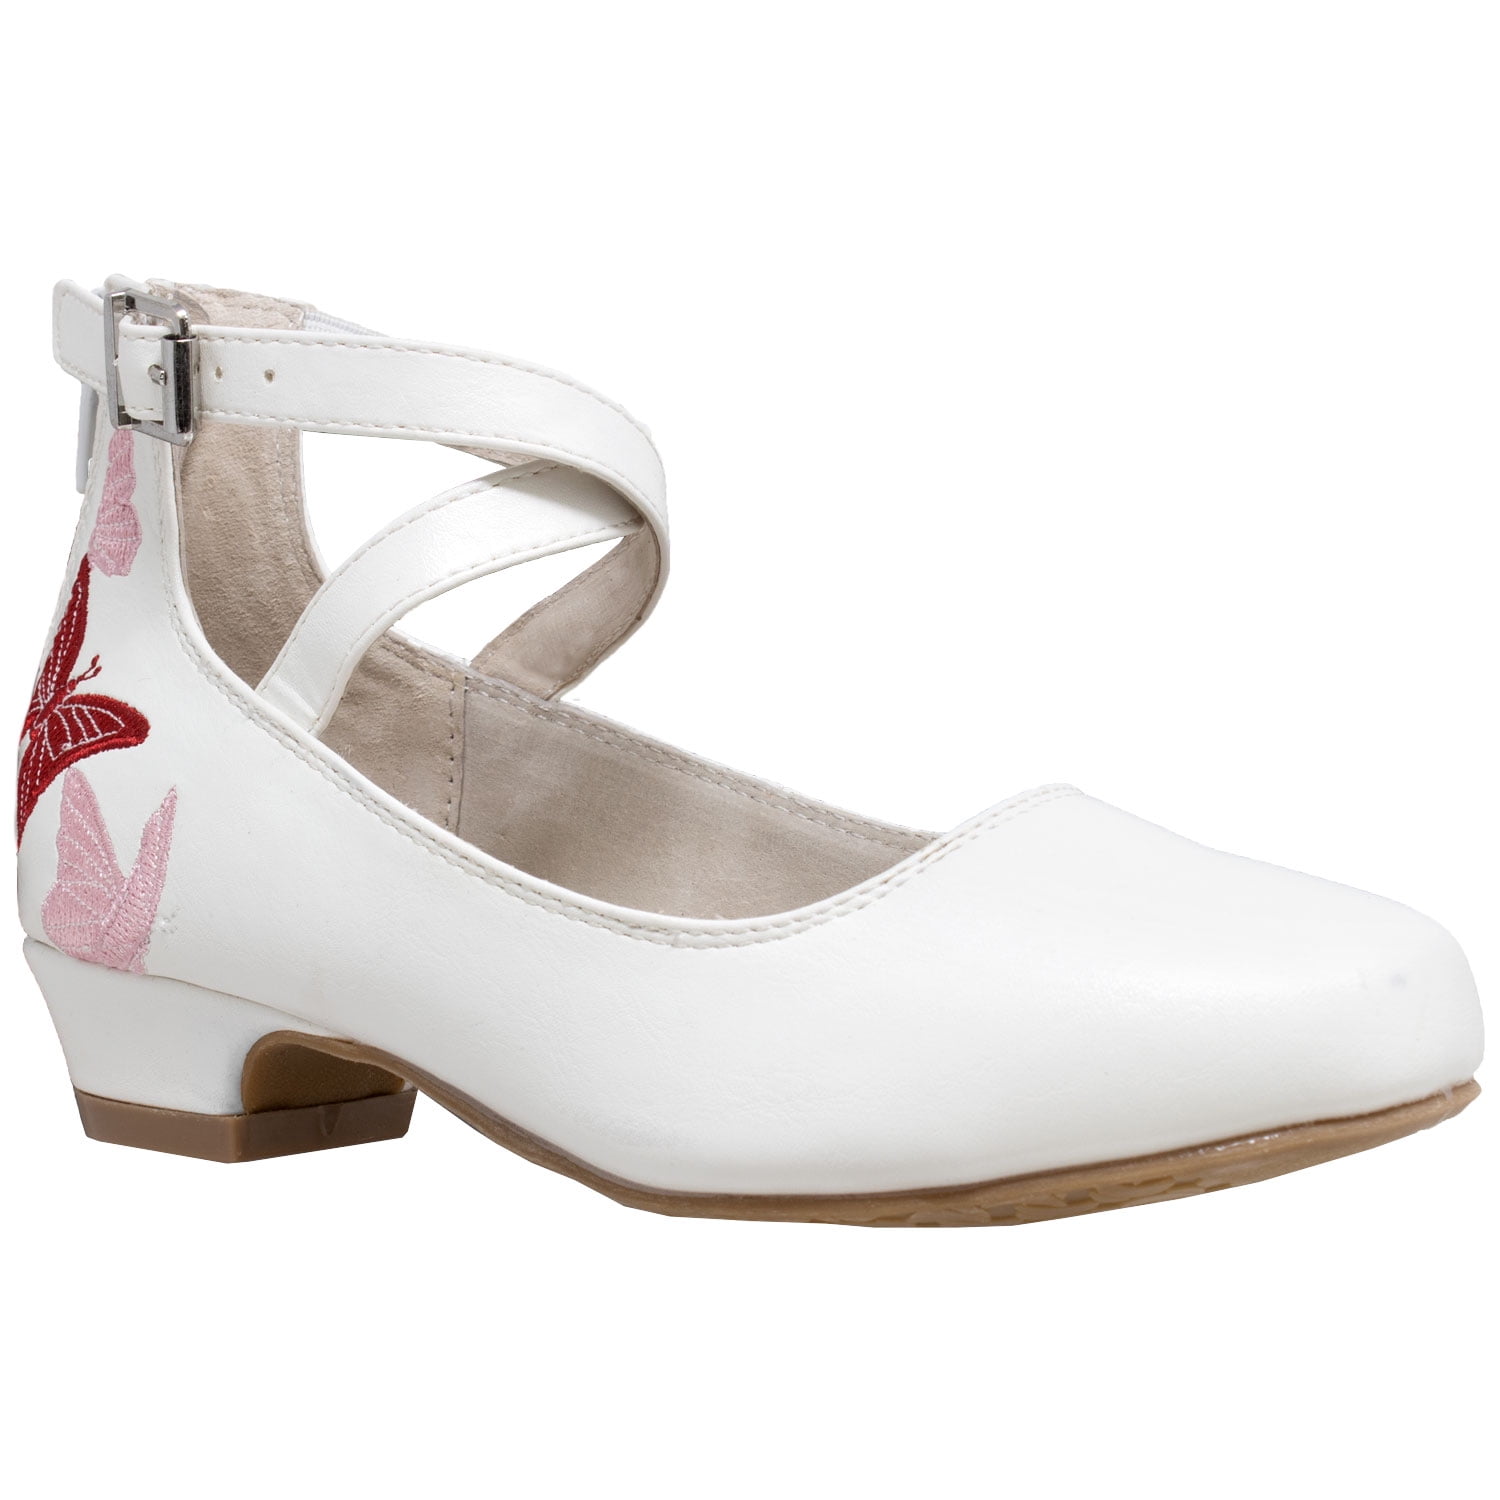 Girl's Dress Shoes Embroidered Jane Block Heel Pumps White 12 - Walmart.com